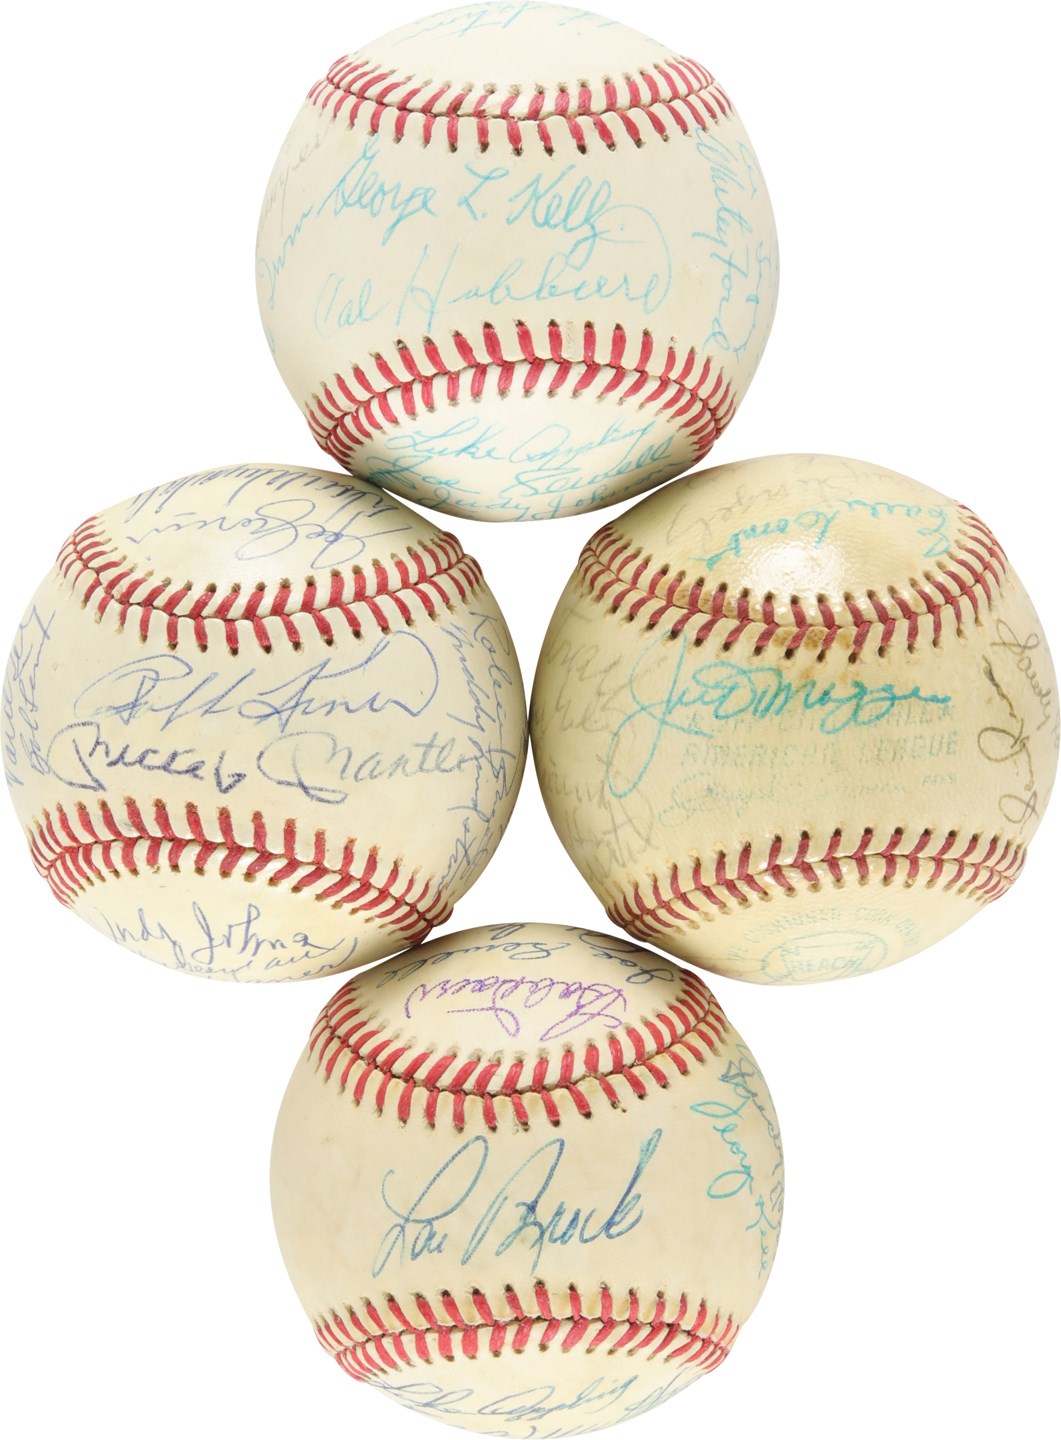 Baseball Autographs - HOFers & Stars Multi-Signed Baseball Collection w/DiMaggio & Koufax (4)